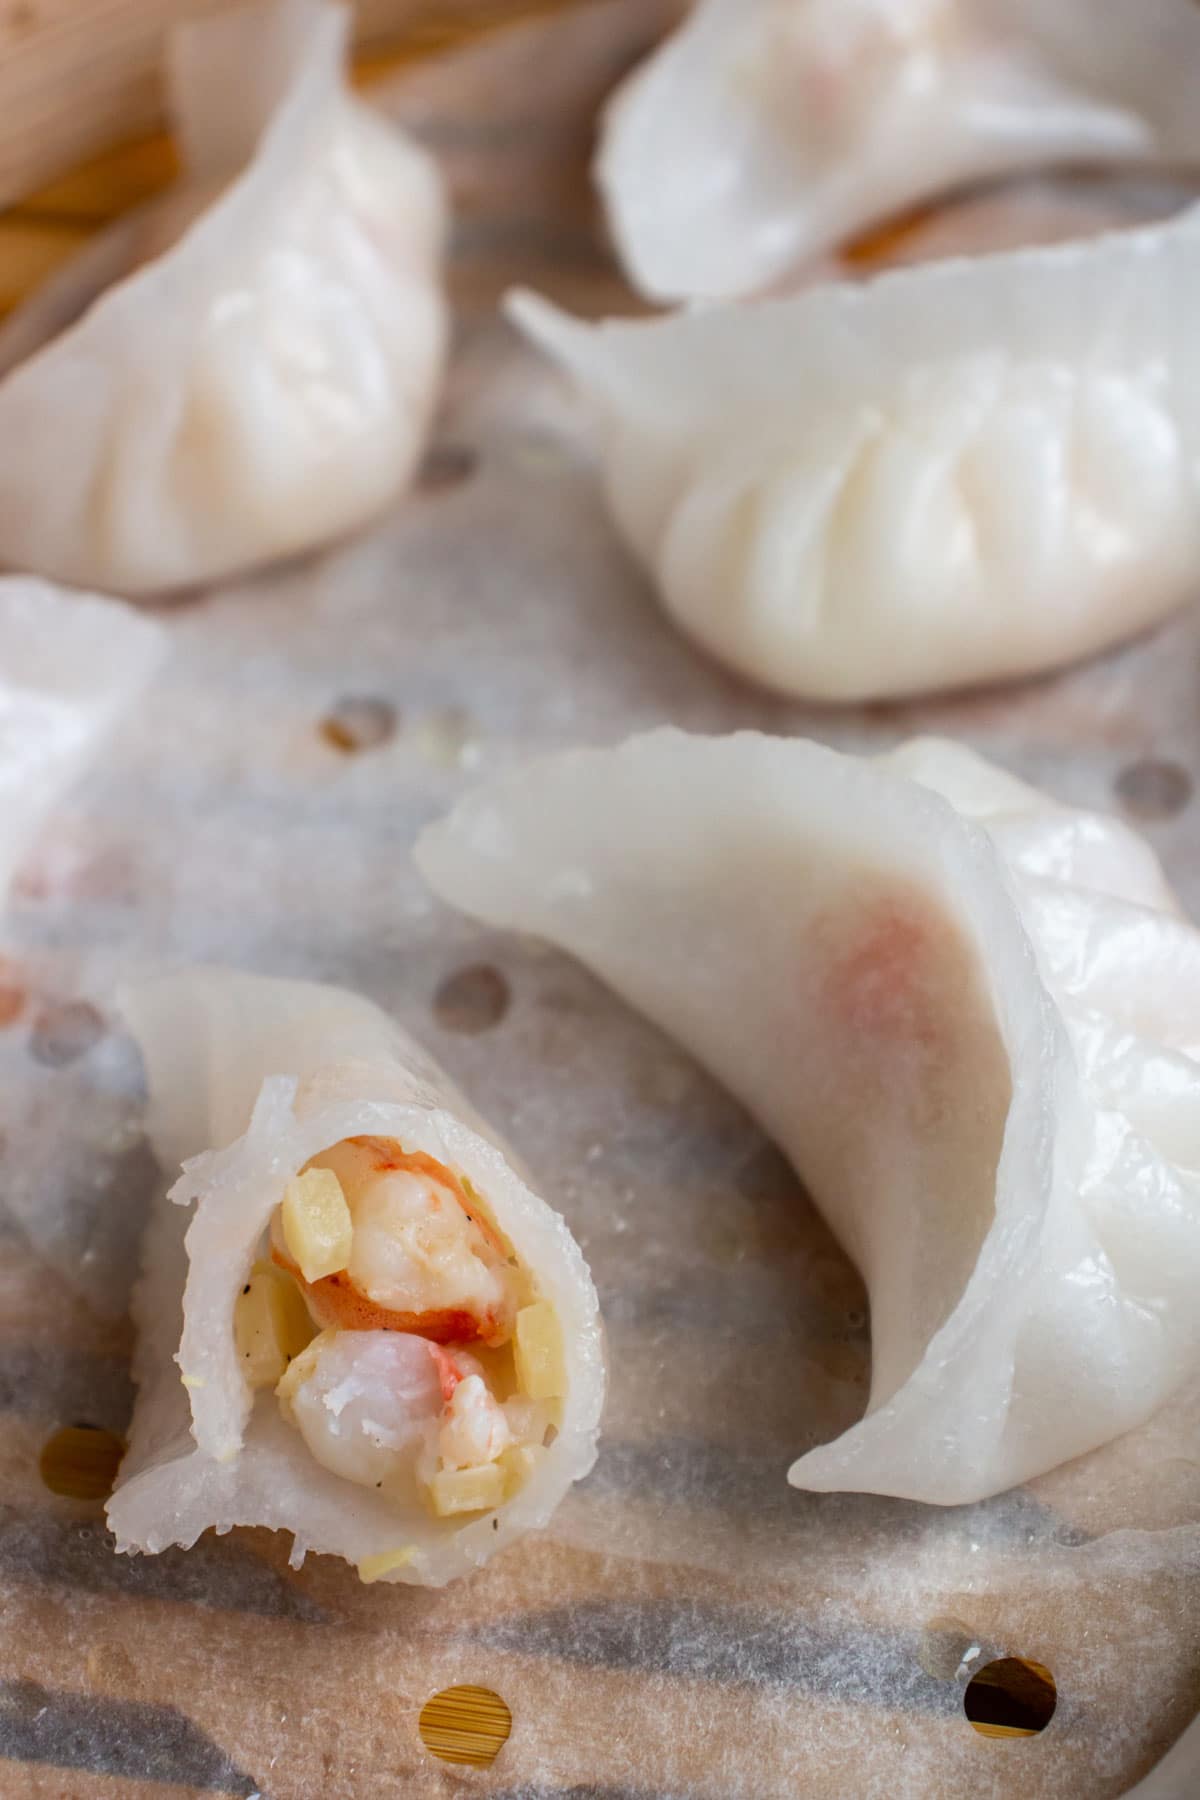 Closeup of a half-eaten har gow dumpling showing off the shrimp and bamboo shoot filling.